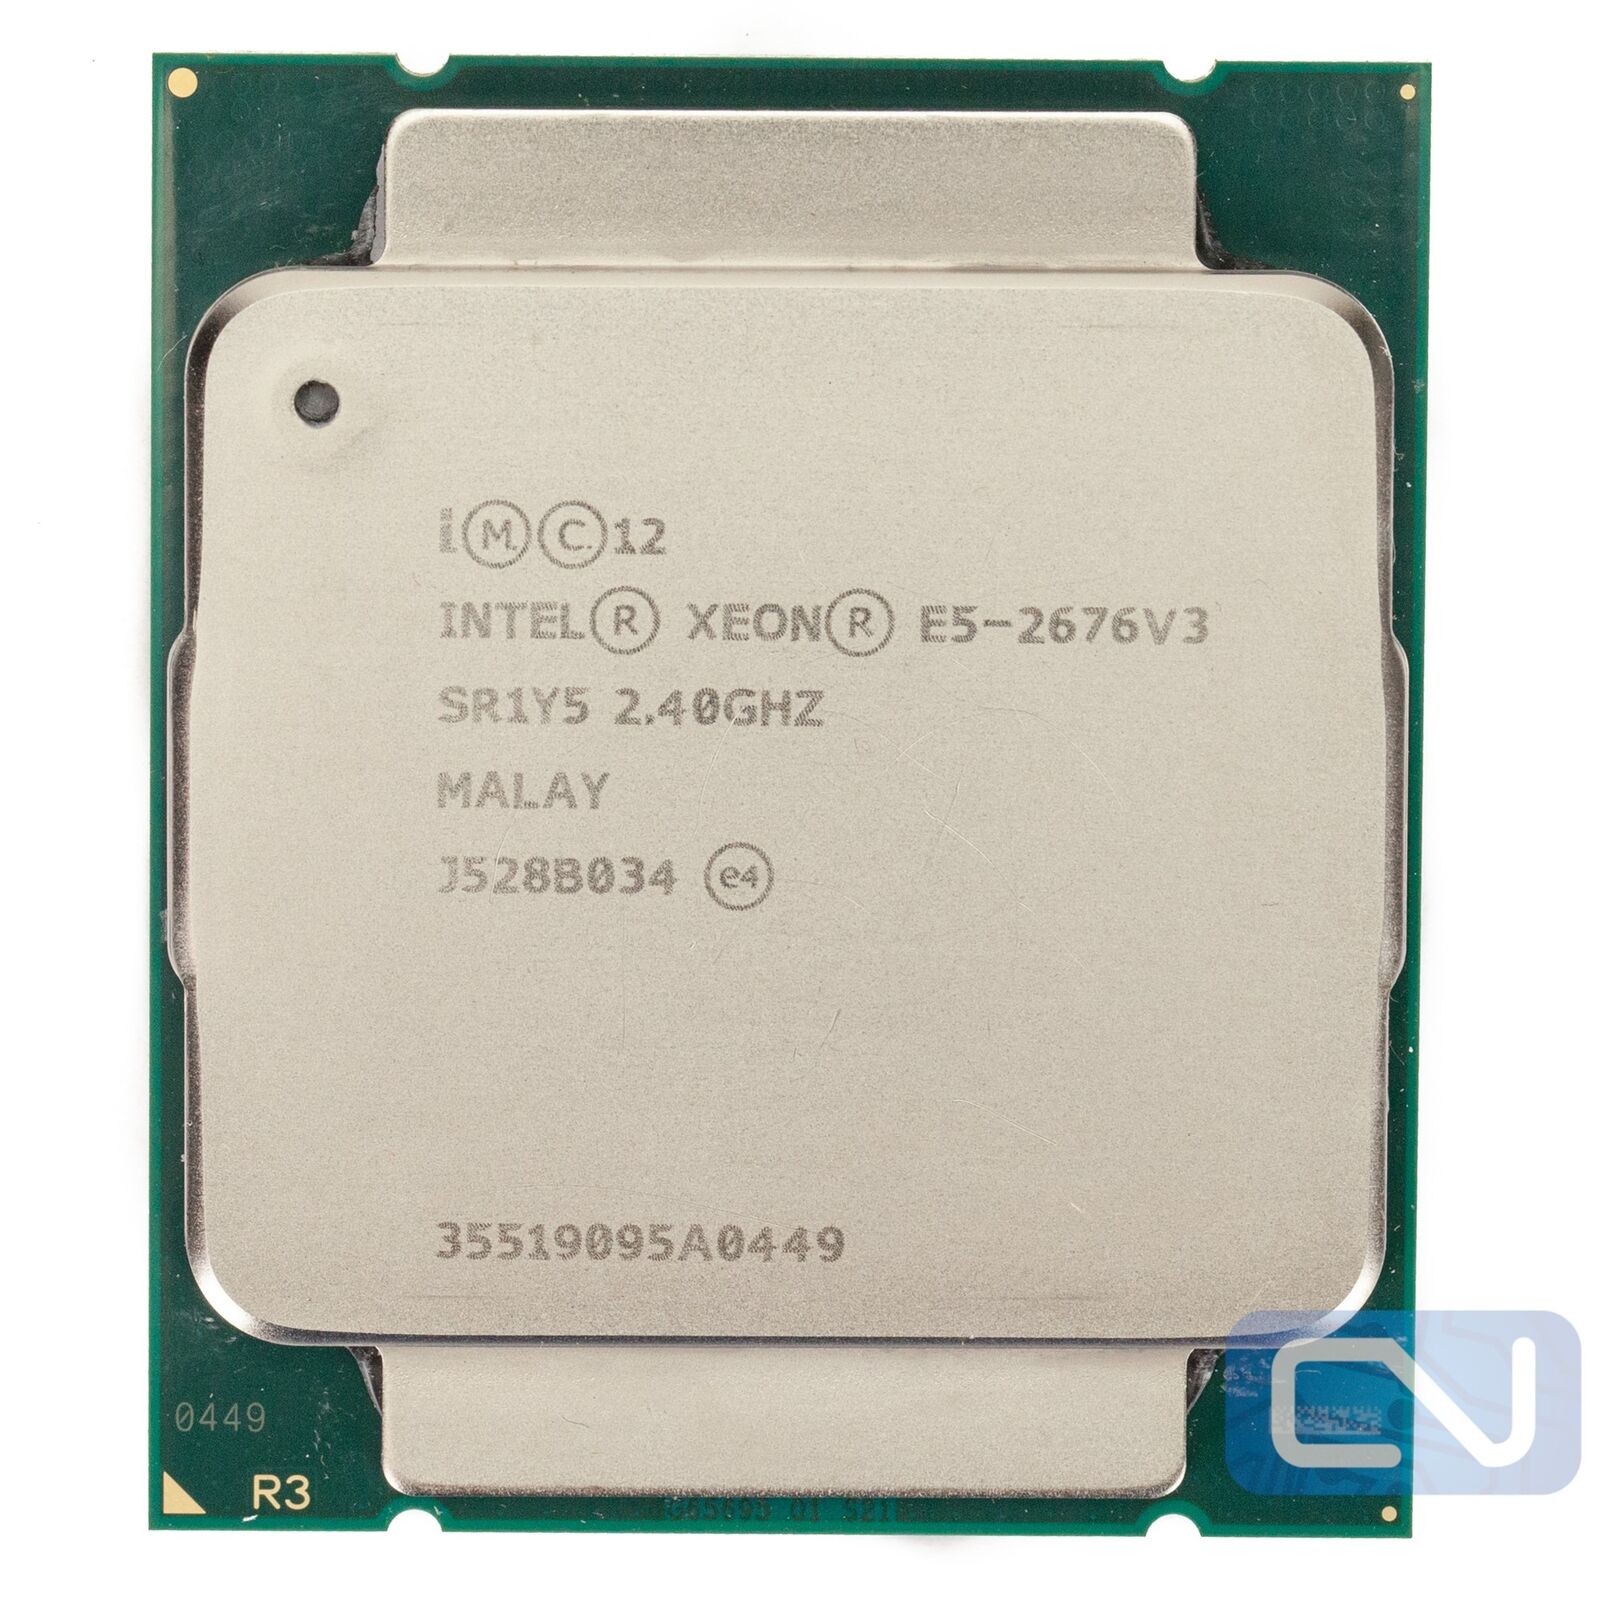 Intel Xeon E5-2676 v3 2.4GHz 30MB SR1Y5 12 Core 2011-3 B Grade CPU Processor